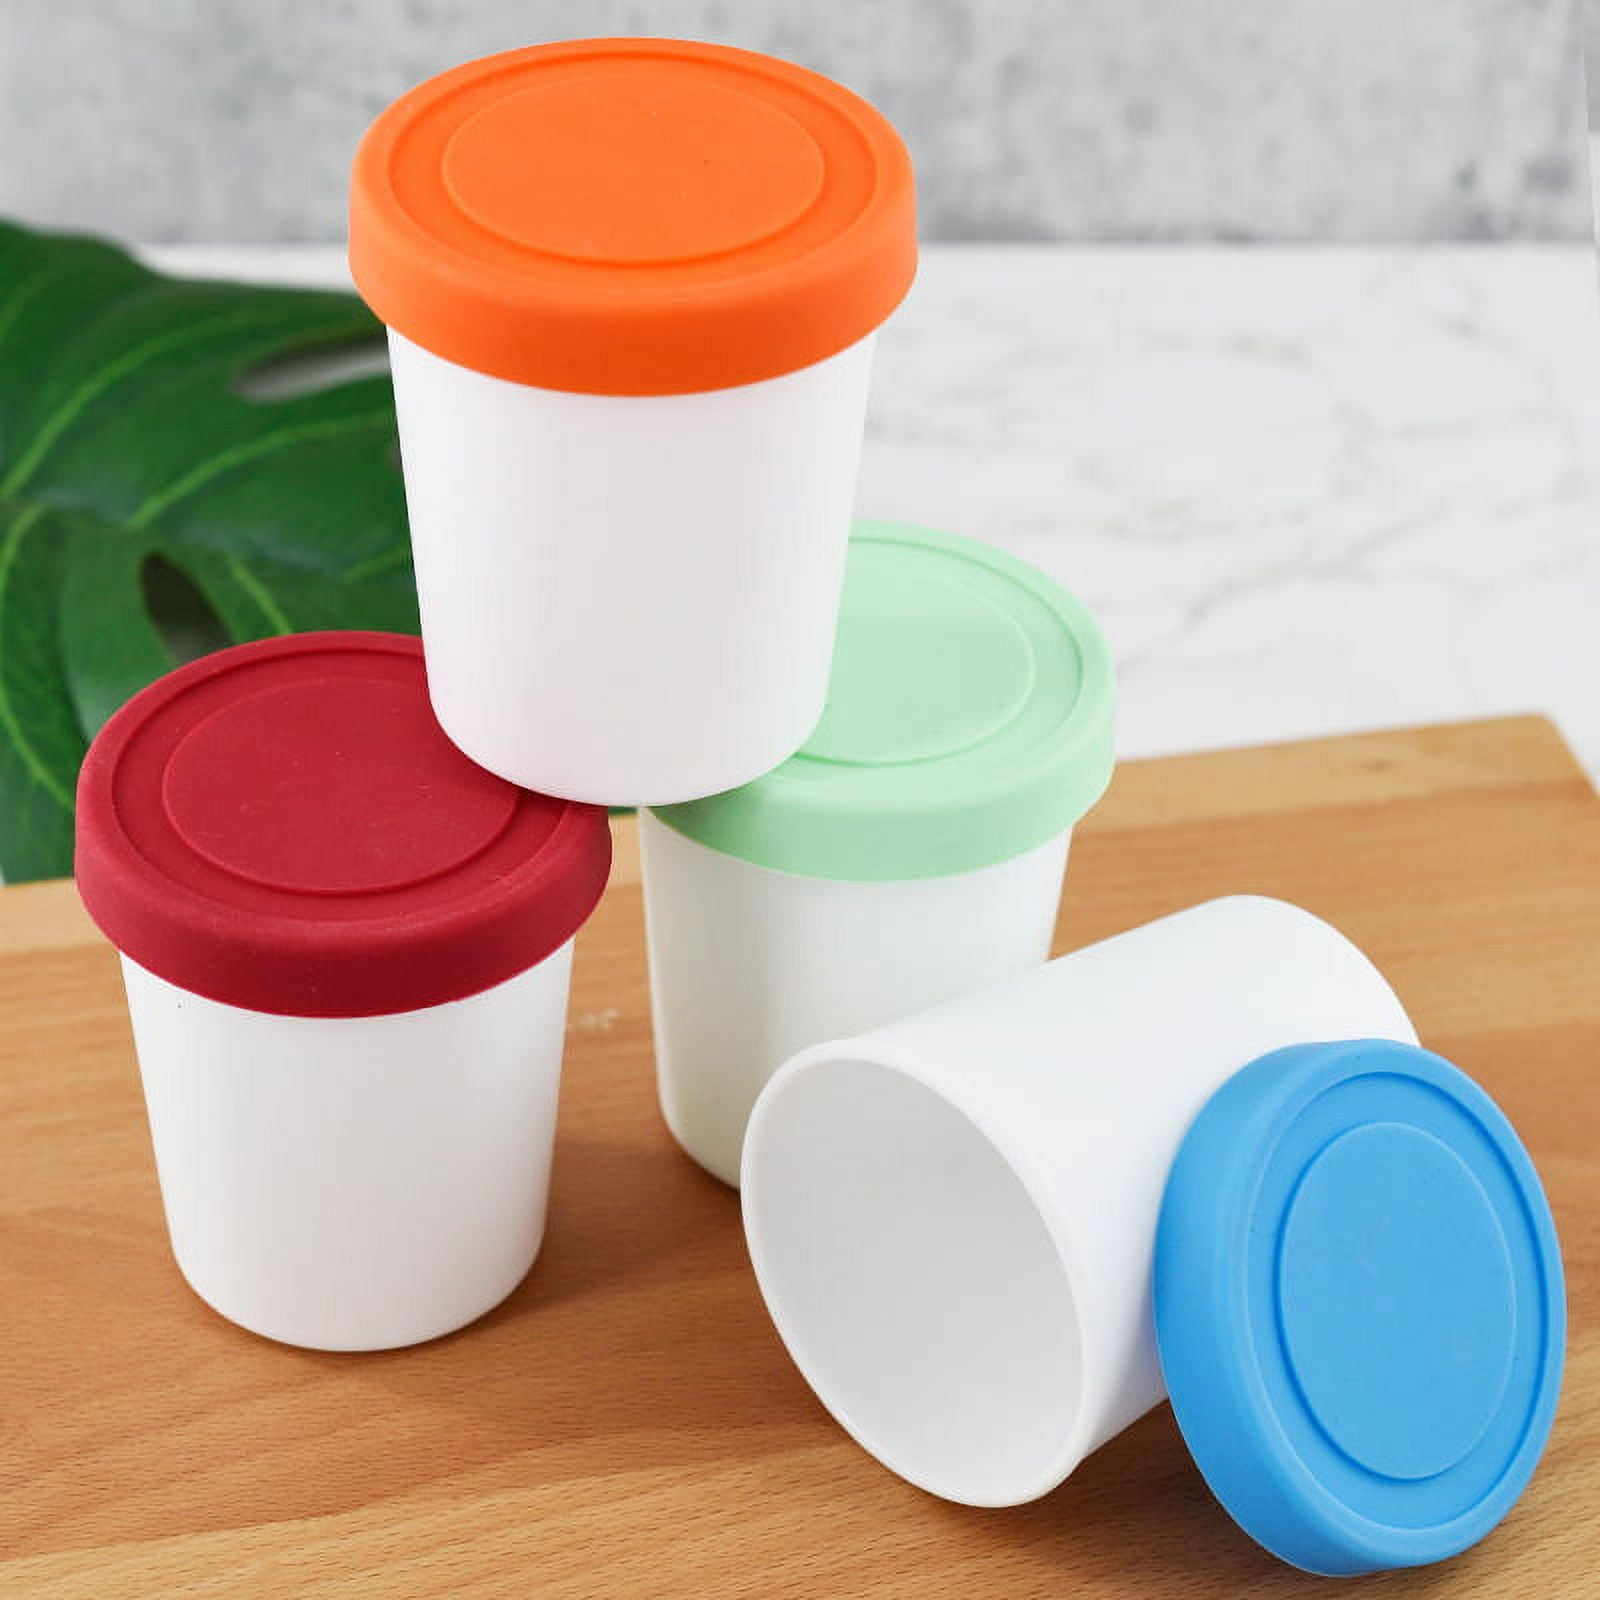 Ice Cream Containers - 2 Quart ea. (Set of 2) - Premium Reusable Freezer Storage for Homemade Ice Cream Tub for Sorbet, Frozen Yogurt - Flexible